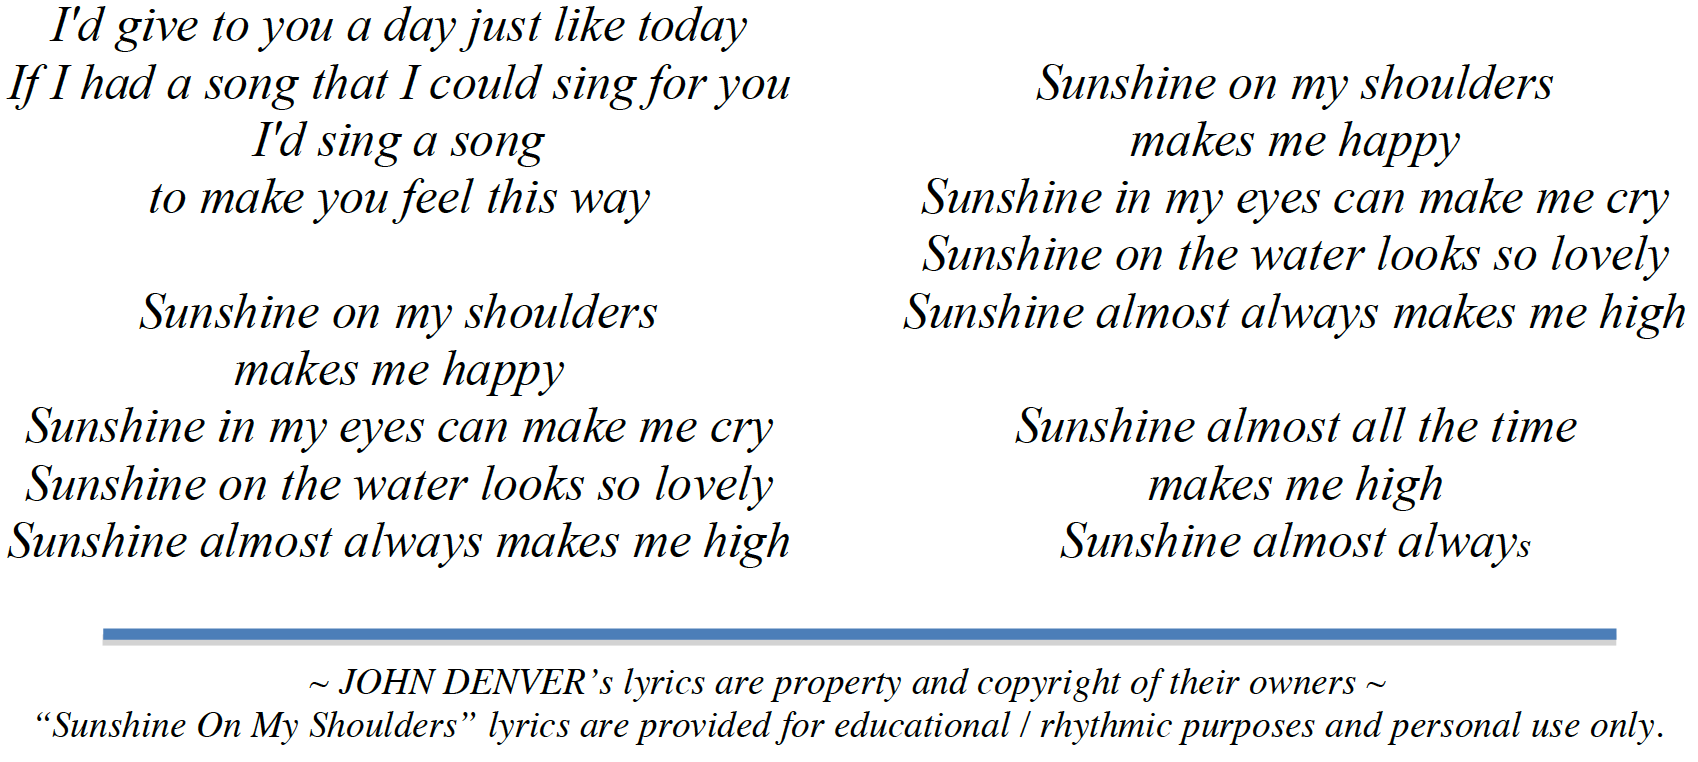 Sunshine On My Shoulders (tradução) 